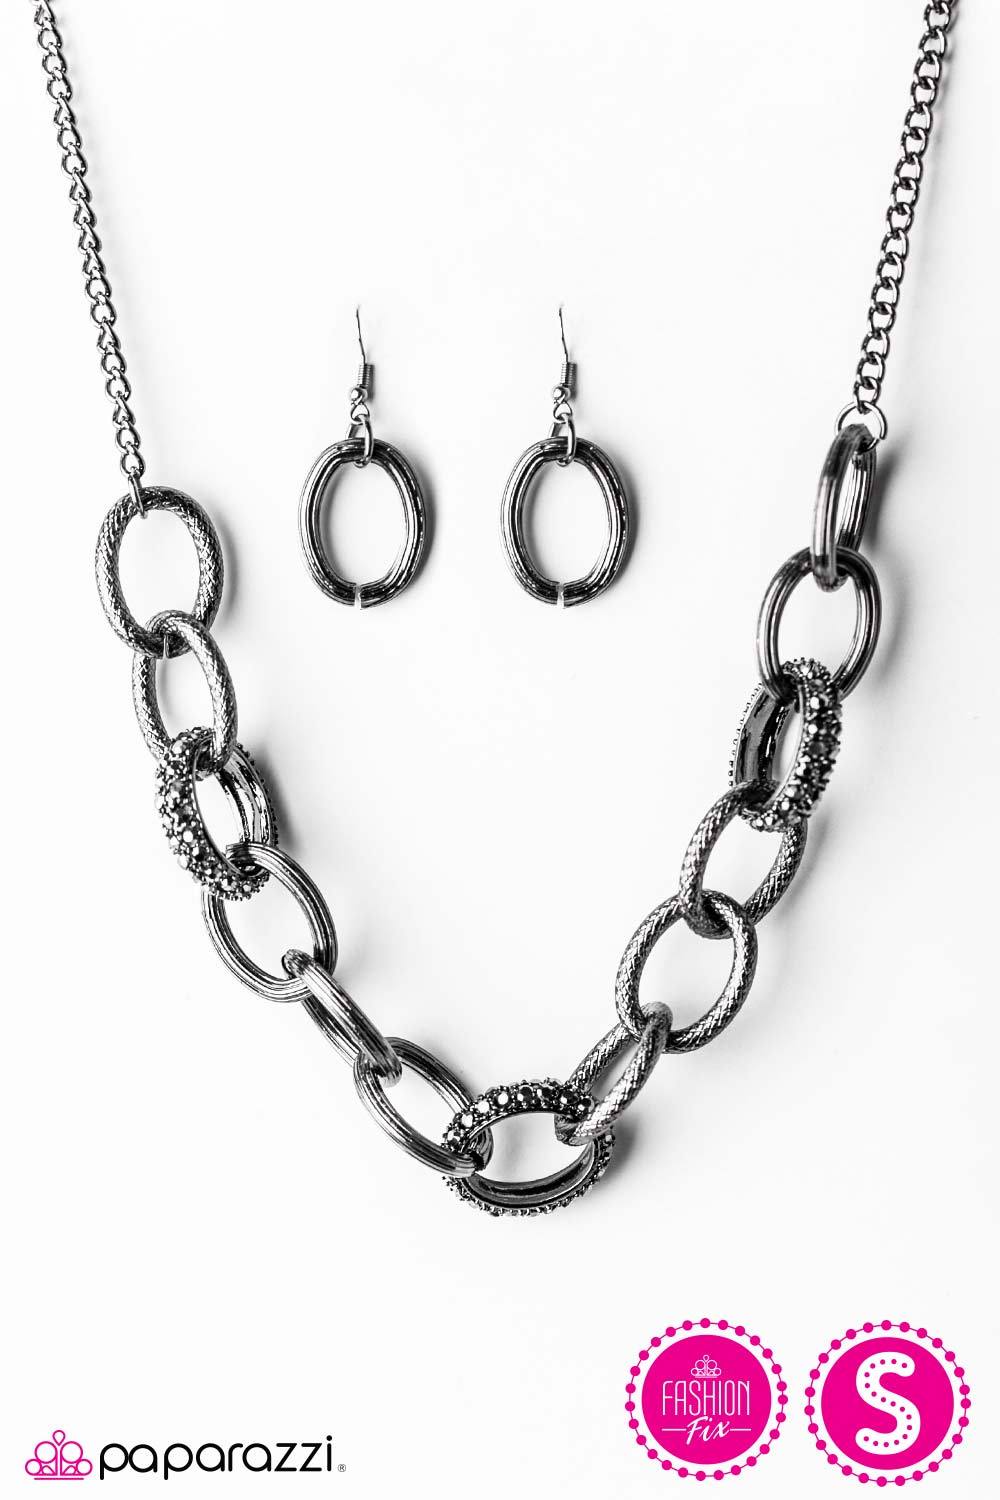 Seize the Night Gunmetal and Rhinestone Necklace - Paparazzi Accessories-CarasShop.com - $5 Jewelry by Cara Jewels